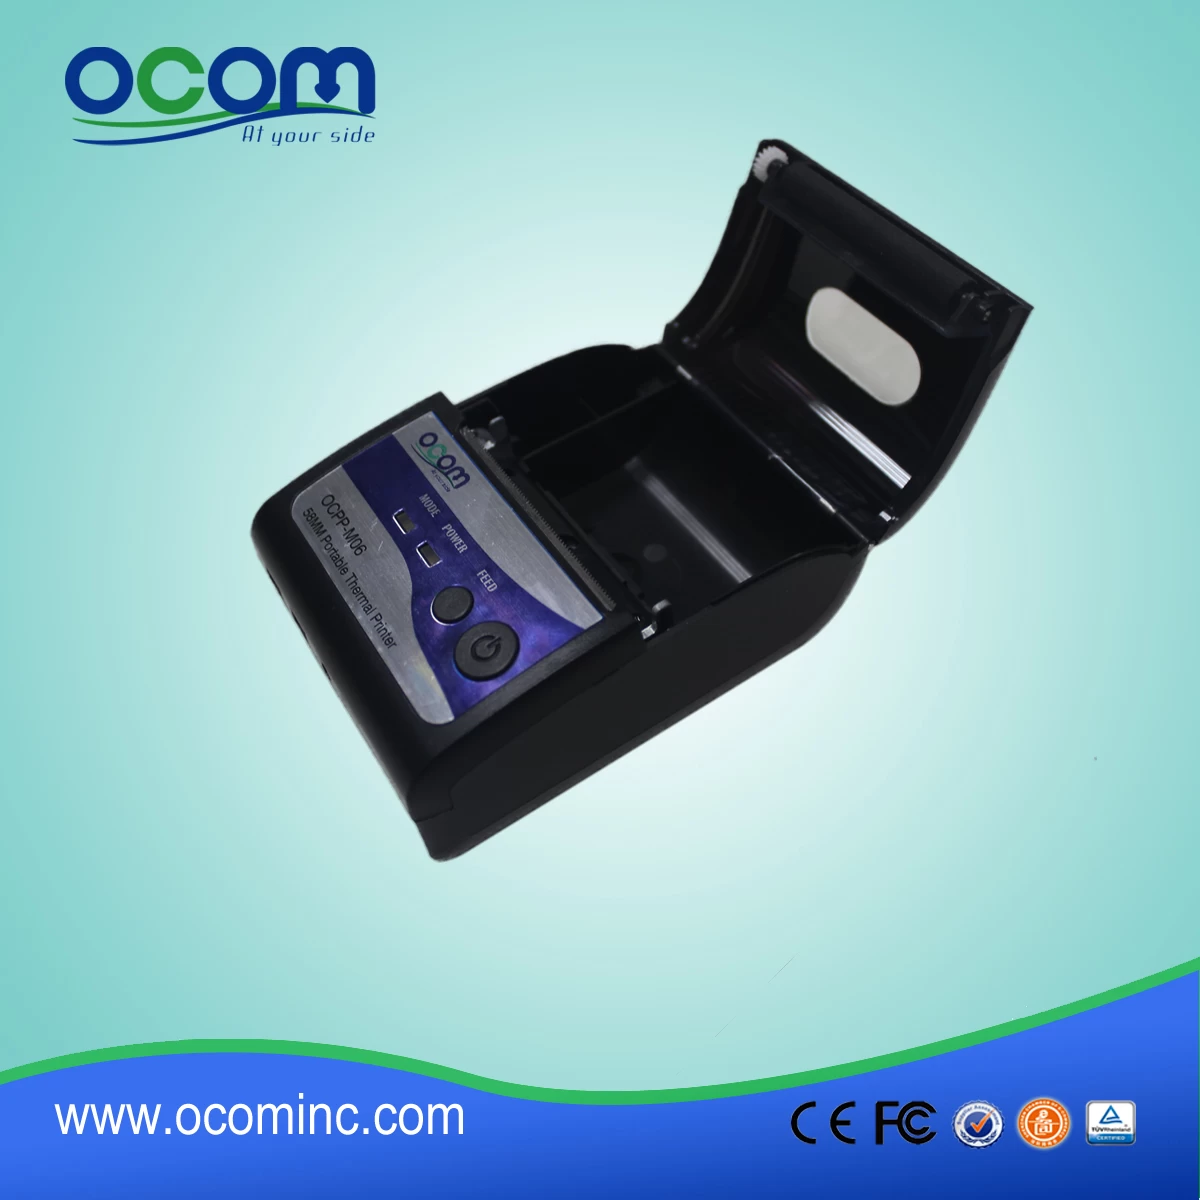 OCPP-M06: China factory cheap 2 inch thermal printer, thermal printer 2 inch